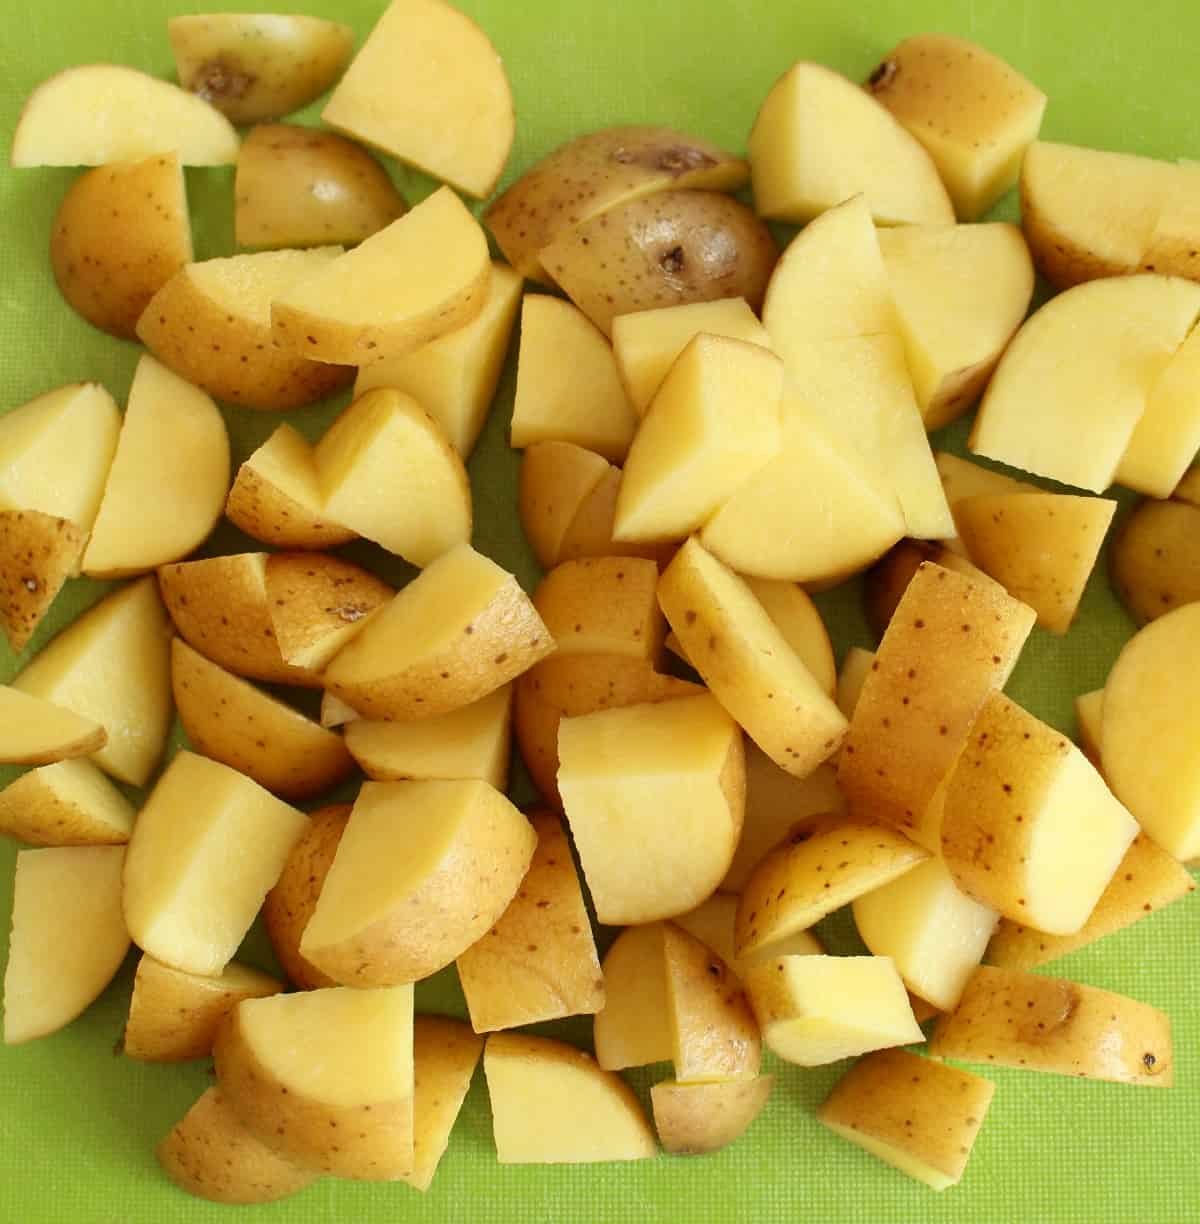 Diced potatoes on a green cutting board.